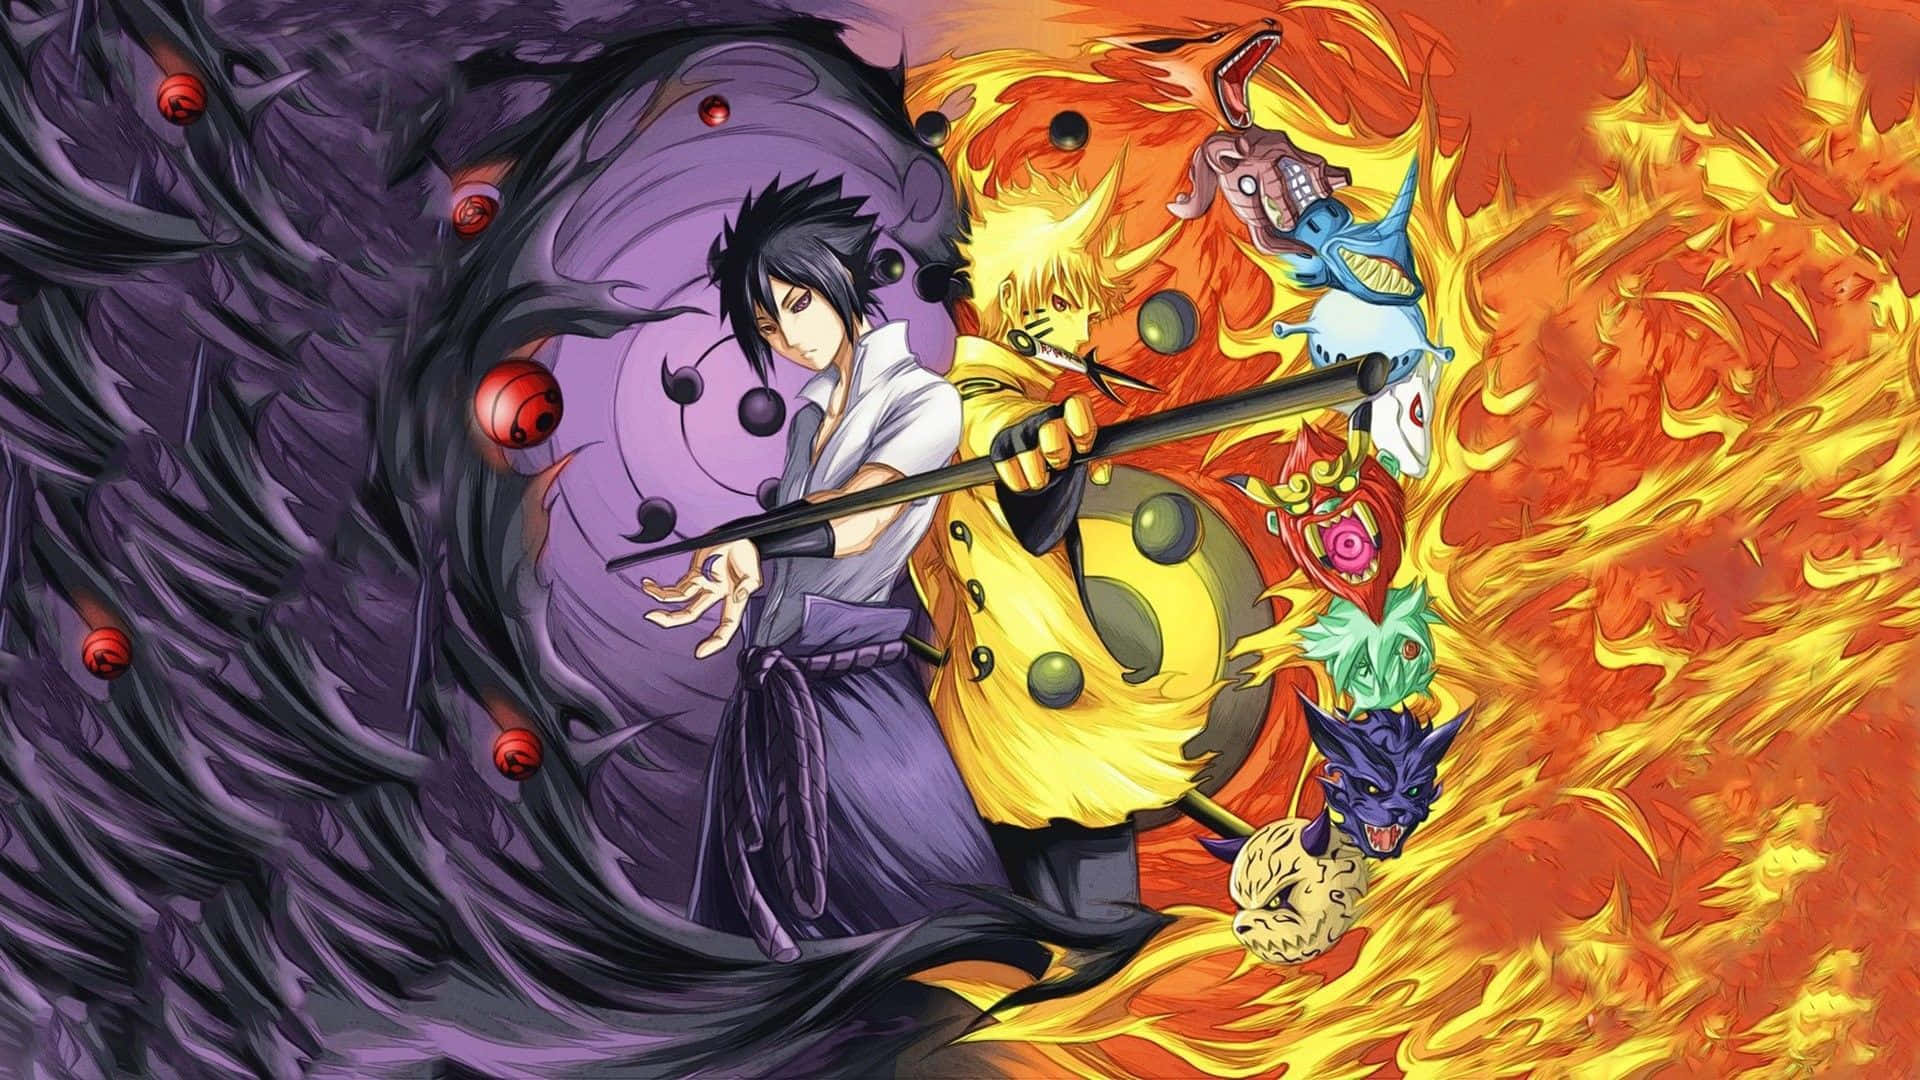  PS4 Hintergrundbild 1920x1080. Download Anime Aesthetic Naruto Sasuke Ps4 Wallpaper